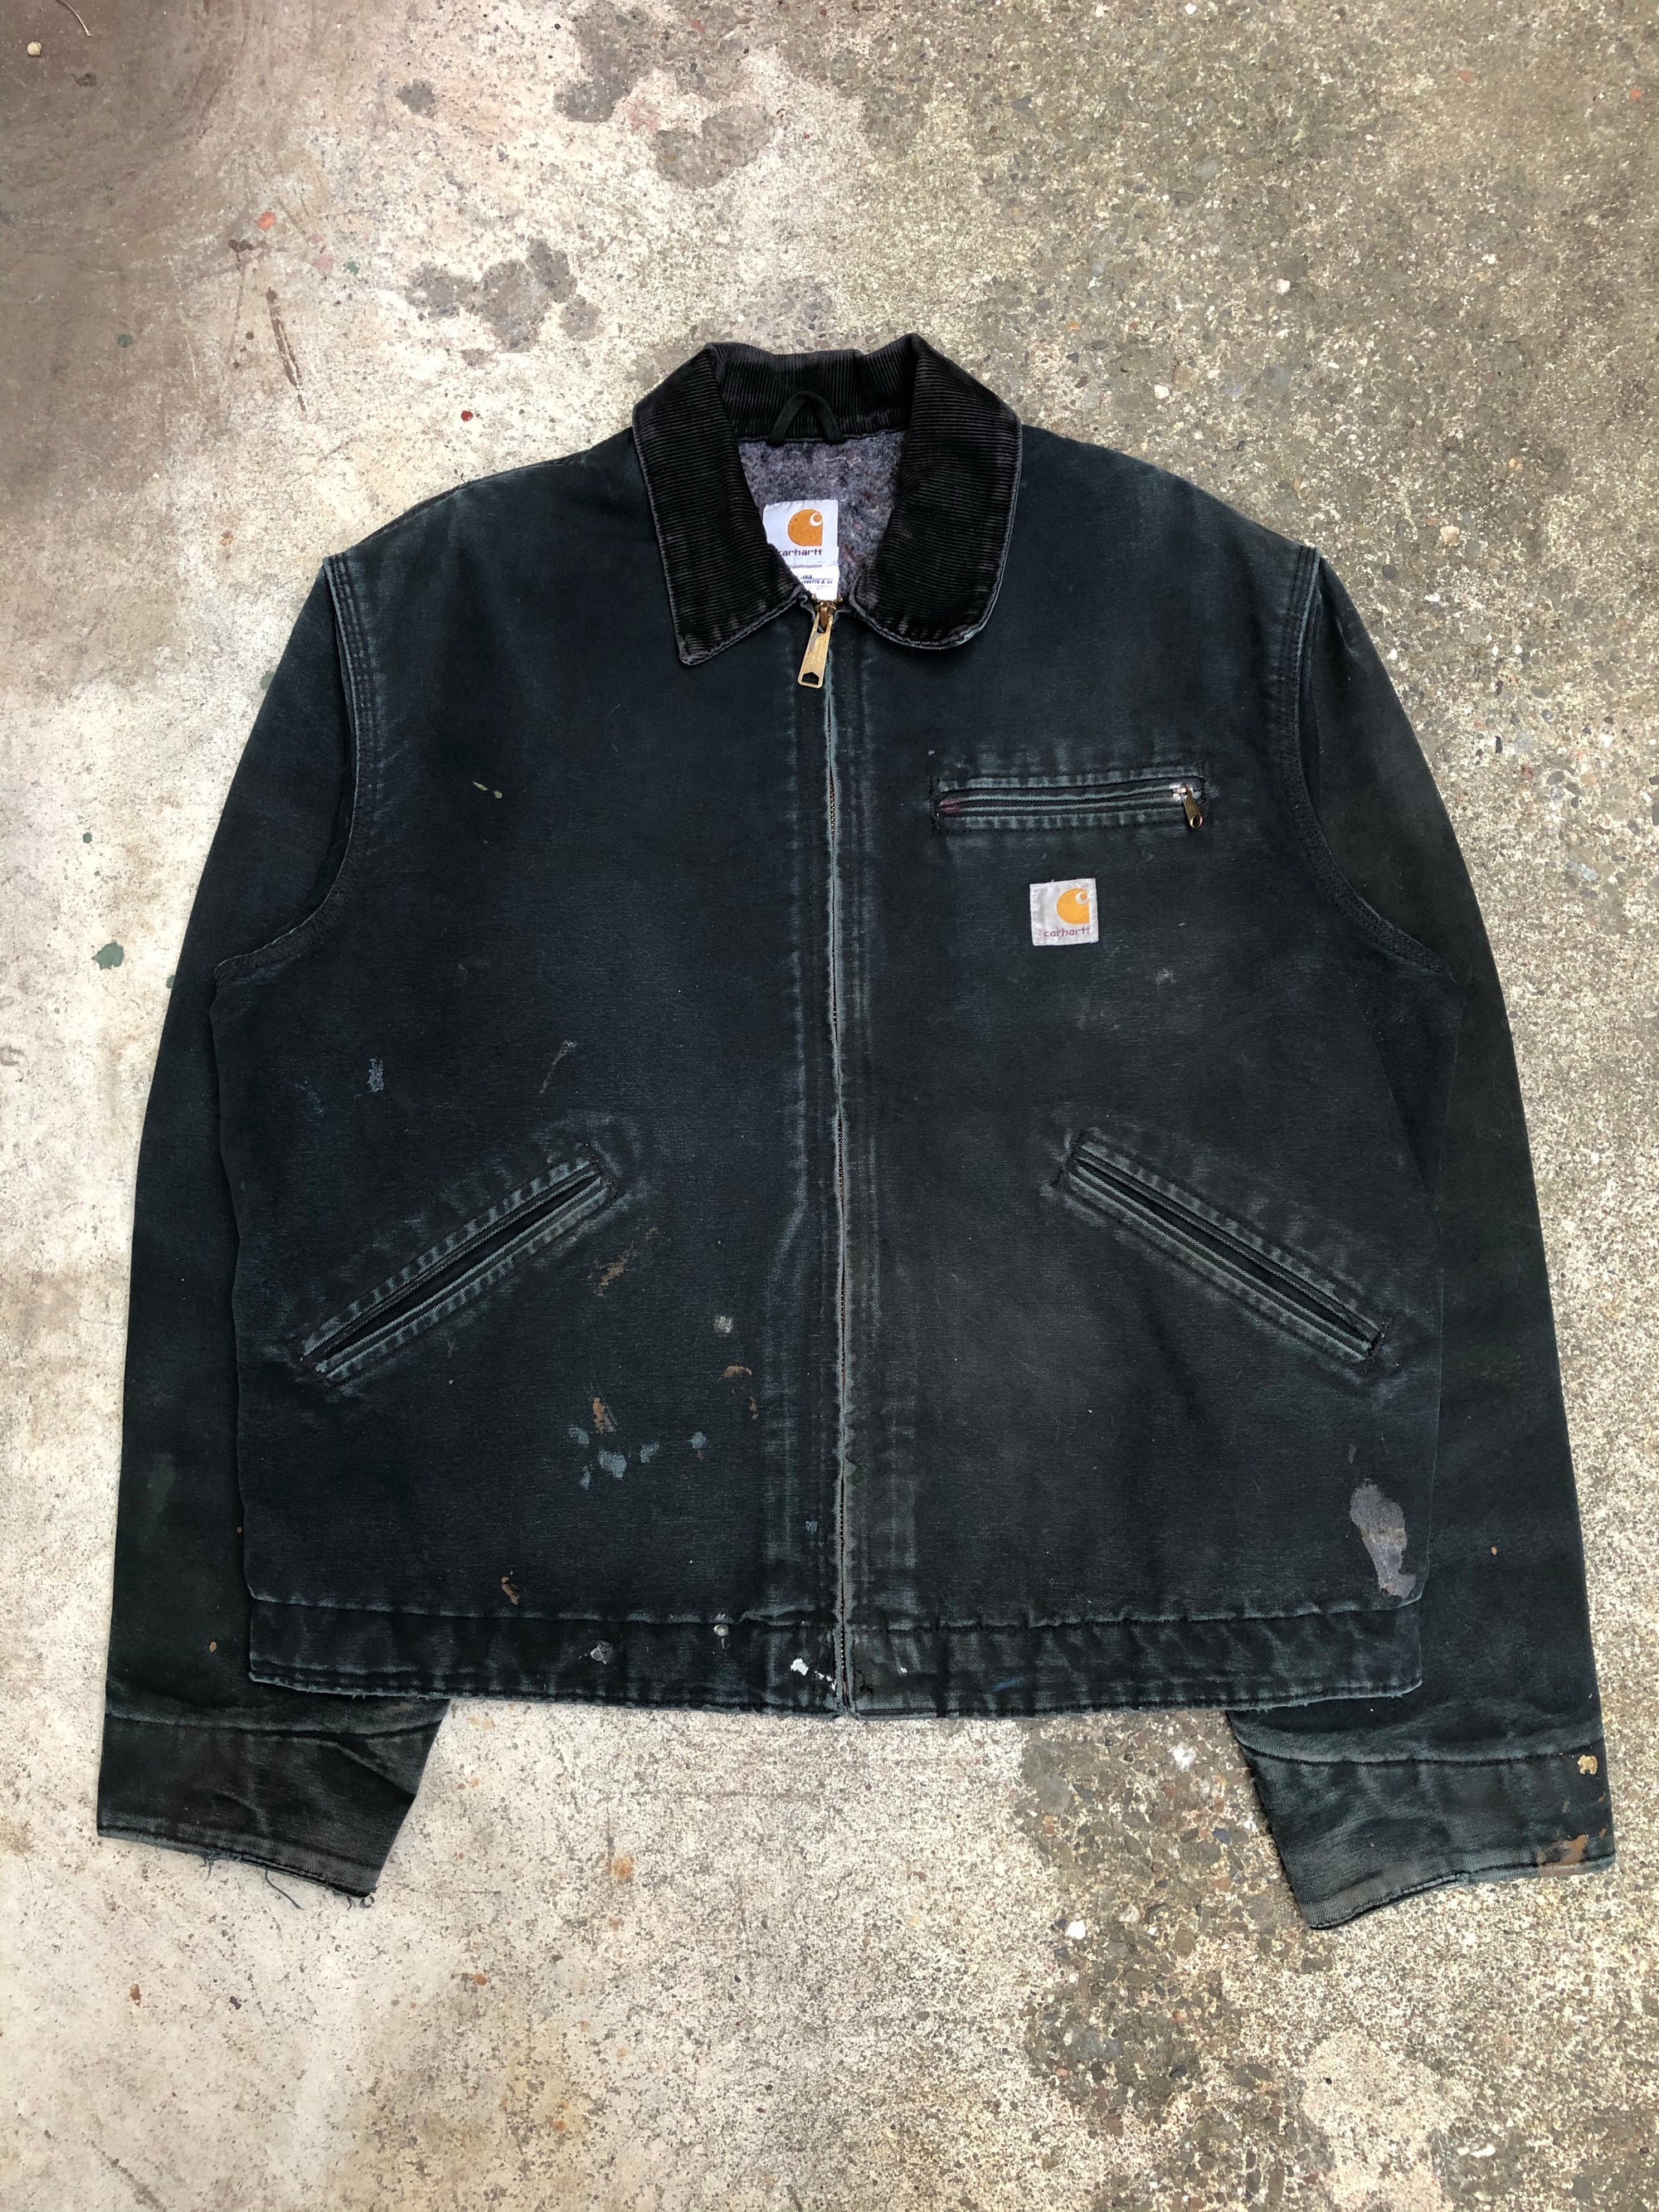 1990s Carhartt Faded Black Lined Work Jacket